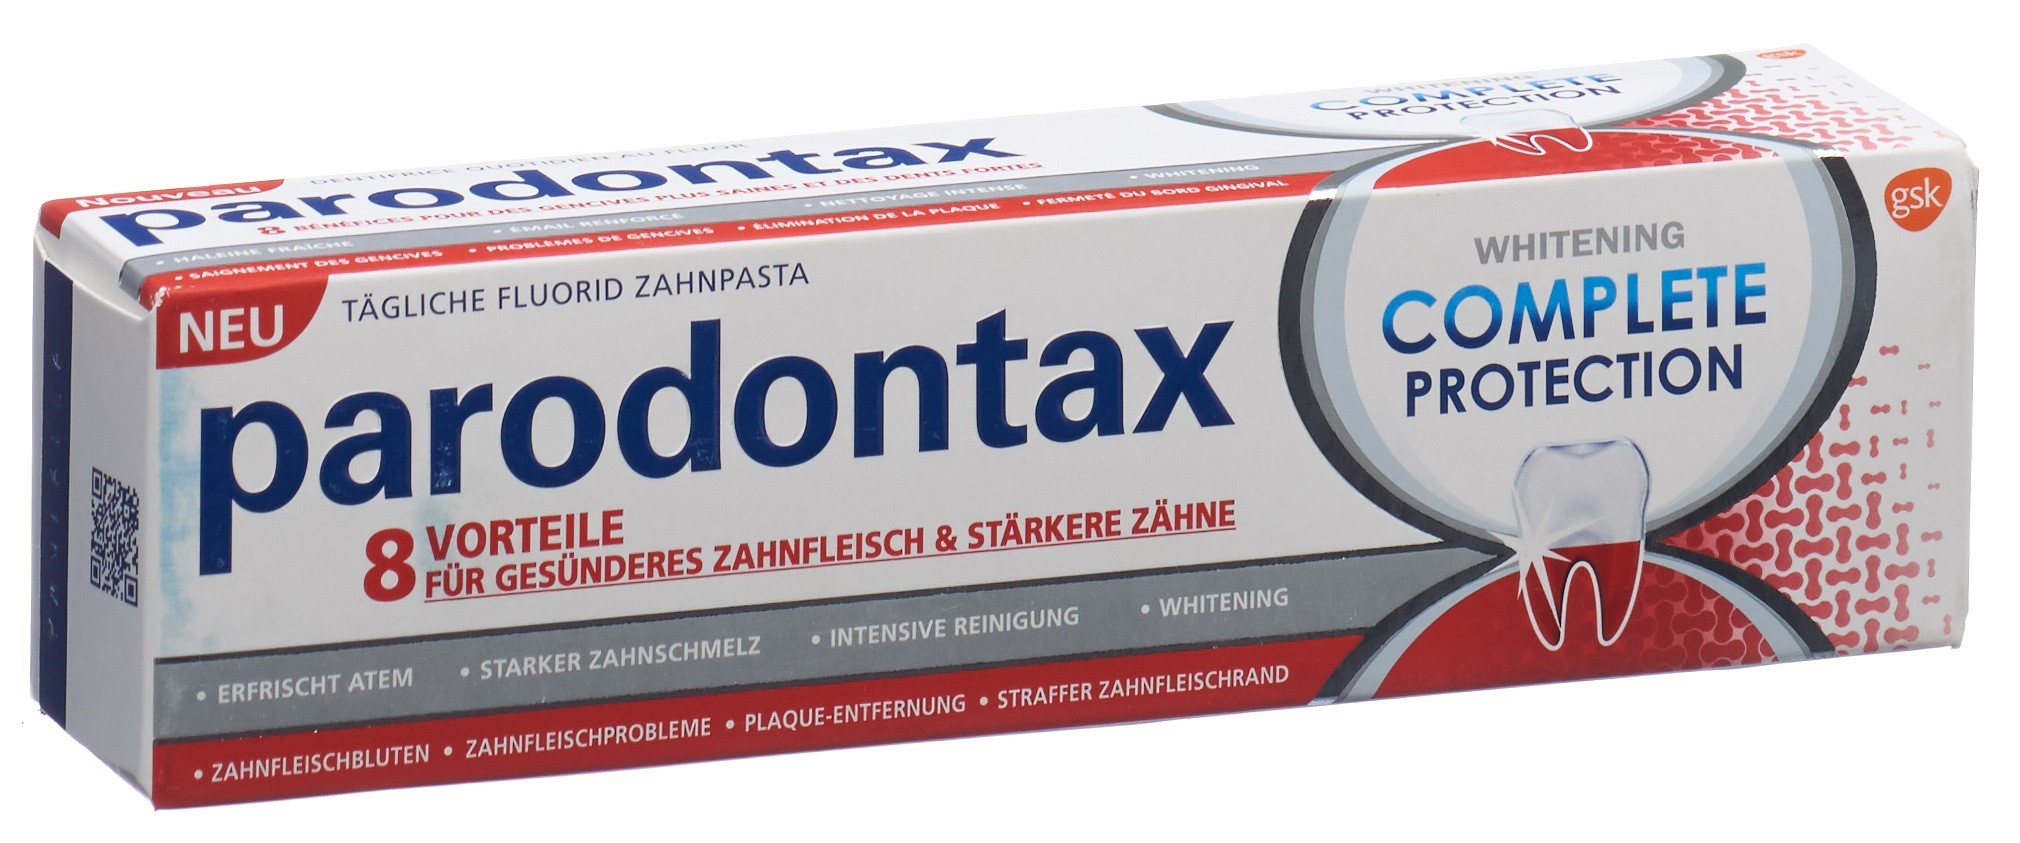 Parodontax Complete Protection Whitening Zahnpasta (75 ml)